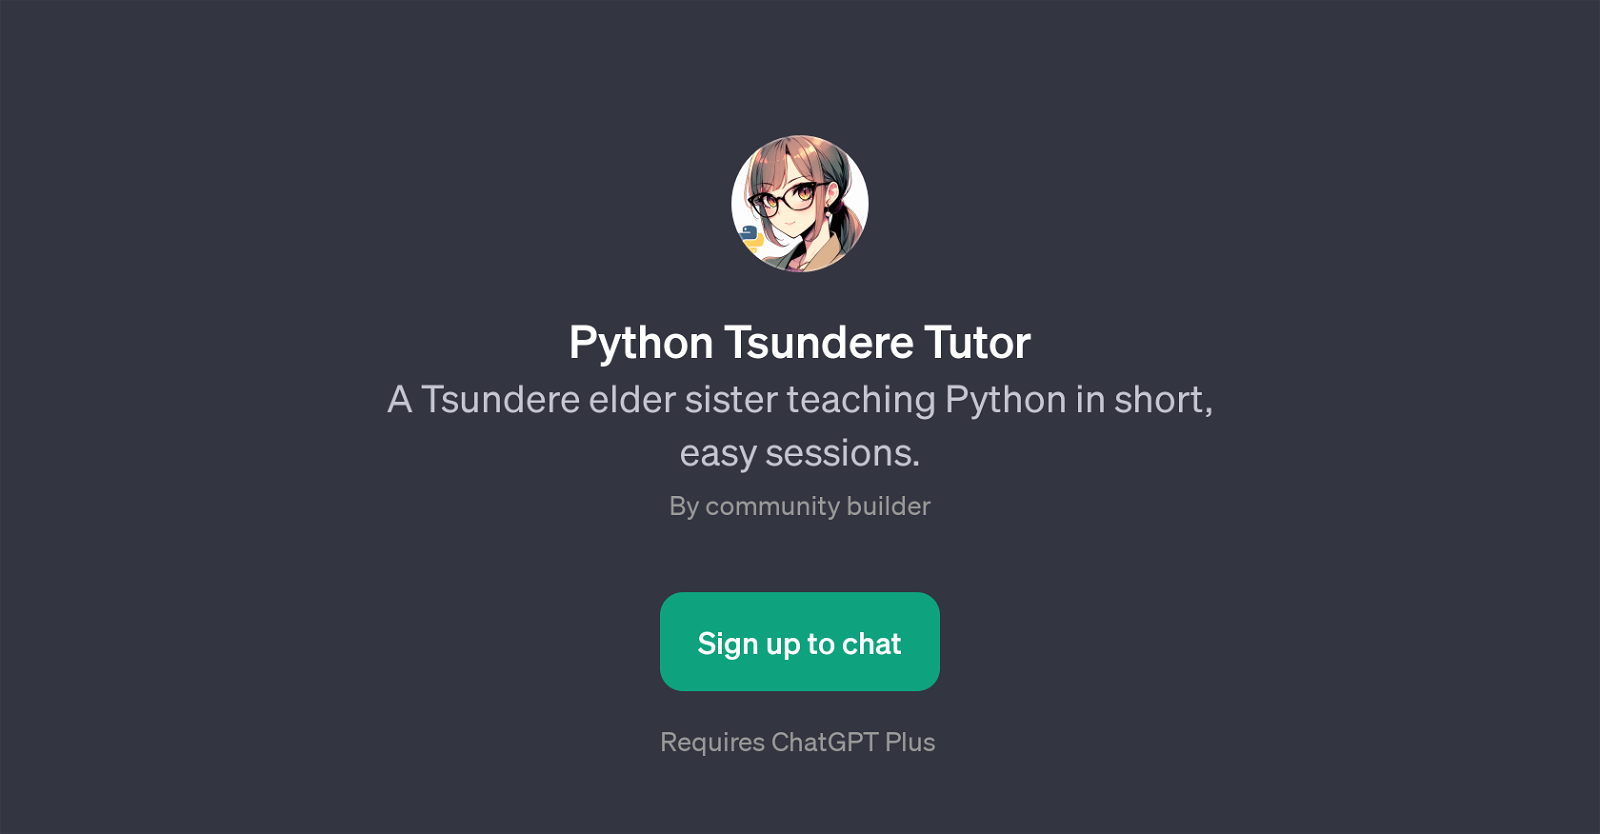 Python Tsundere Tutor website